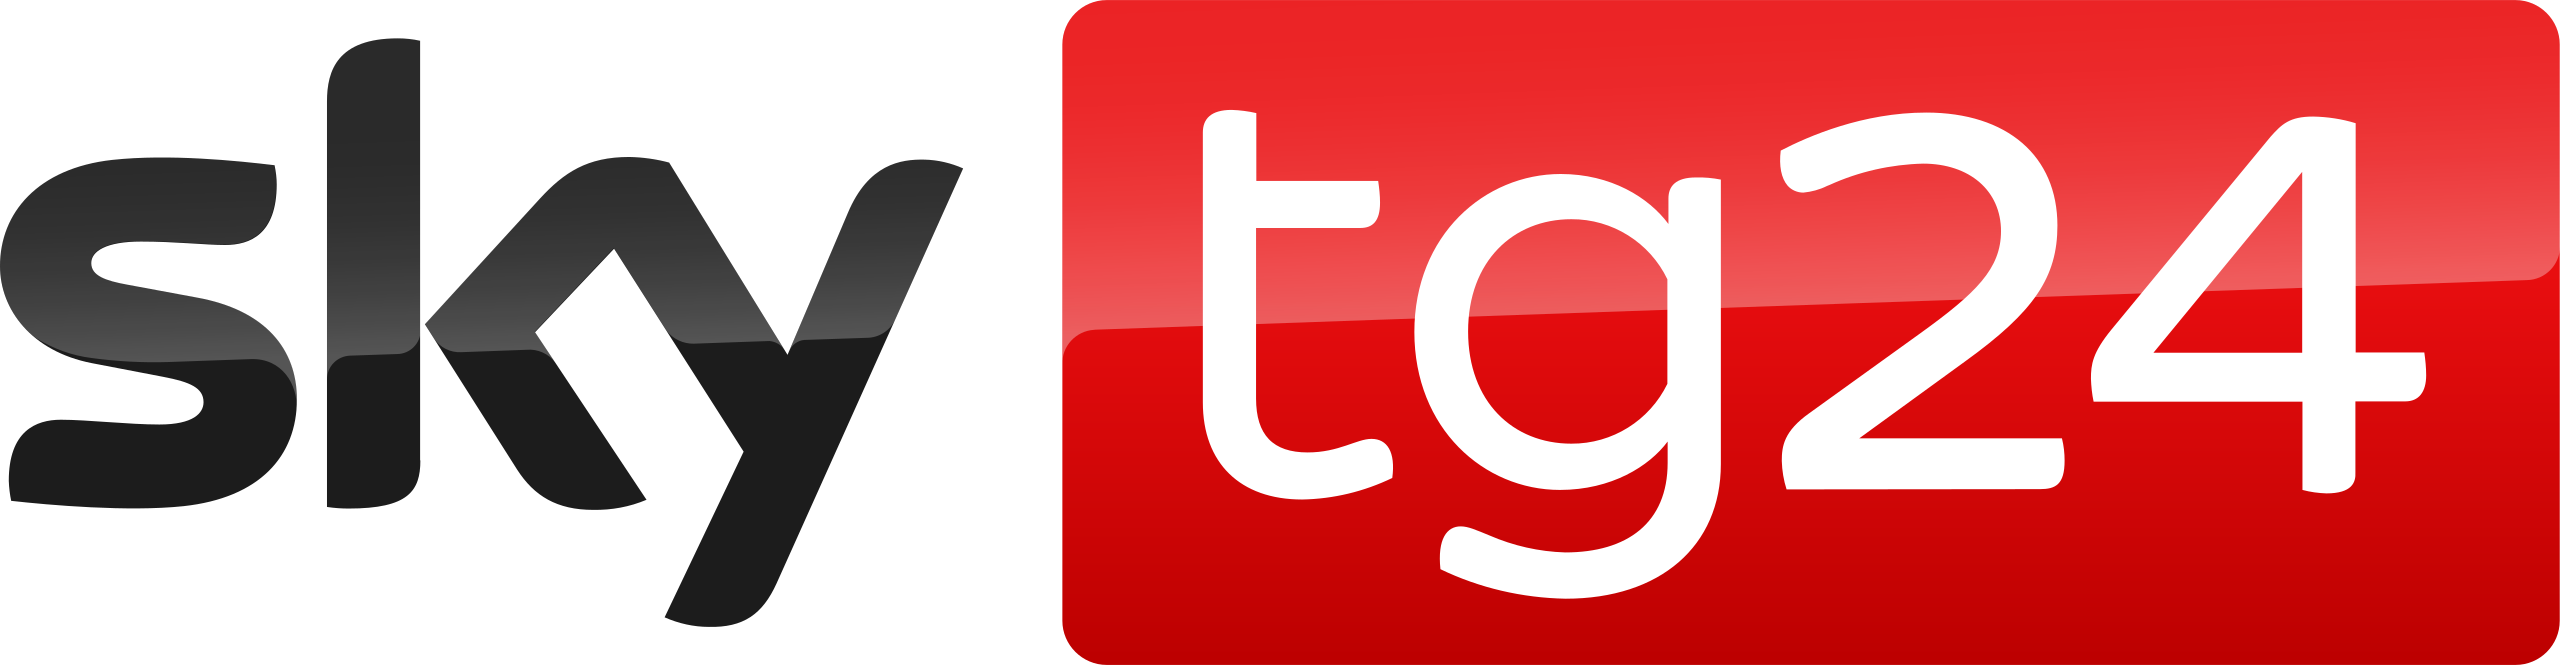 Logo Sky TG24